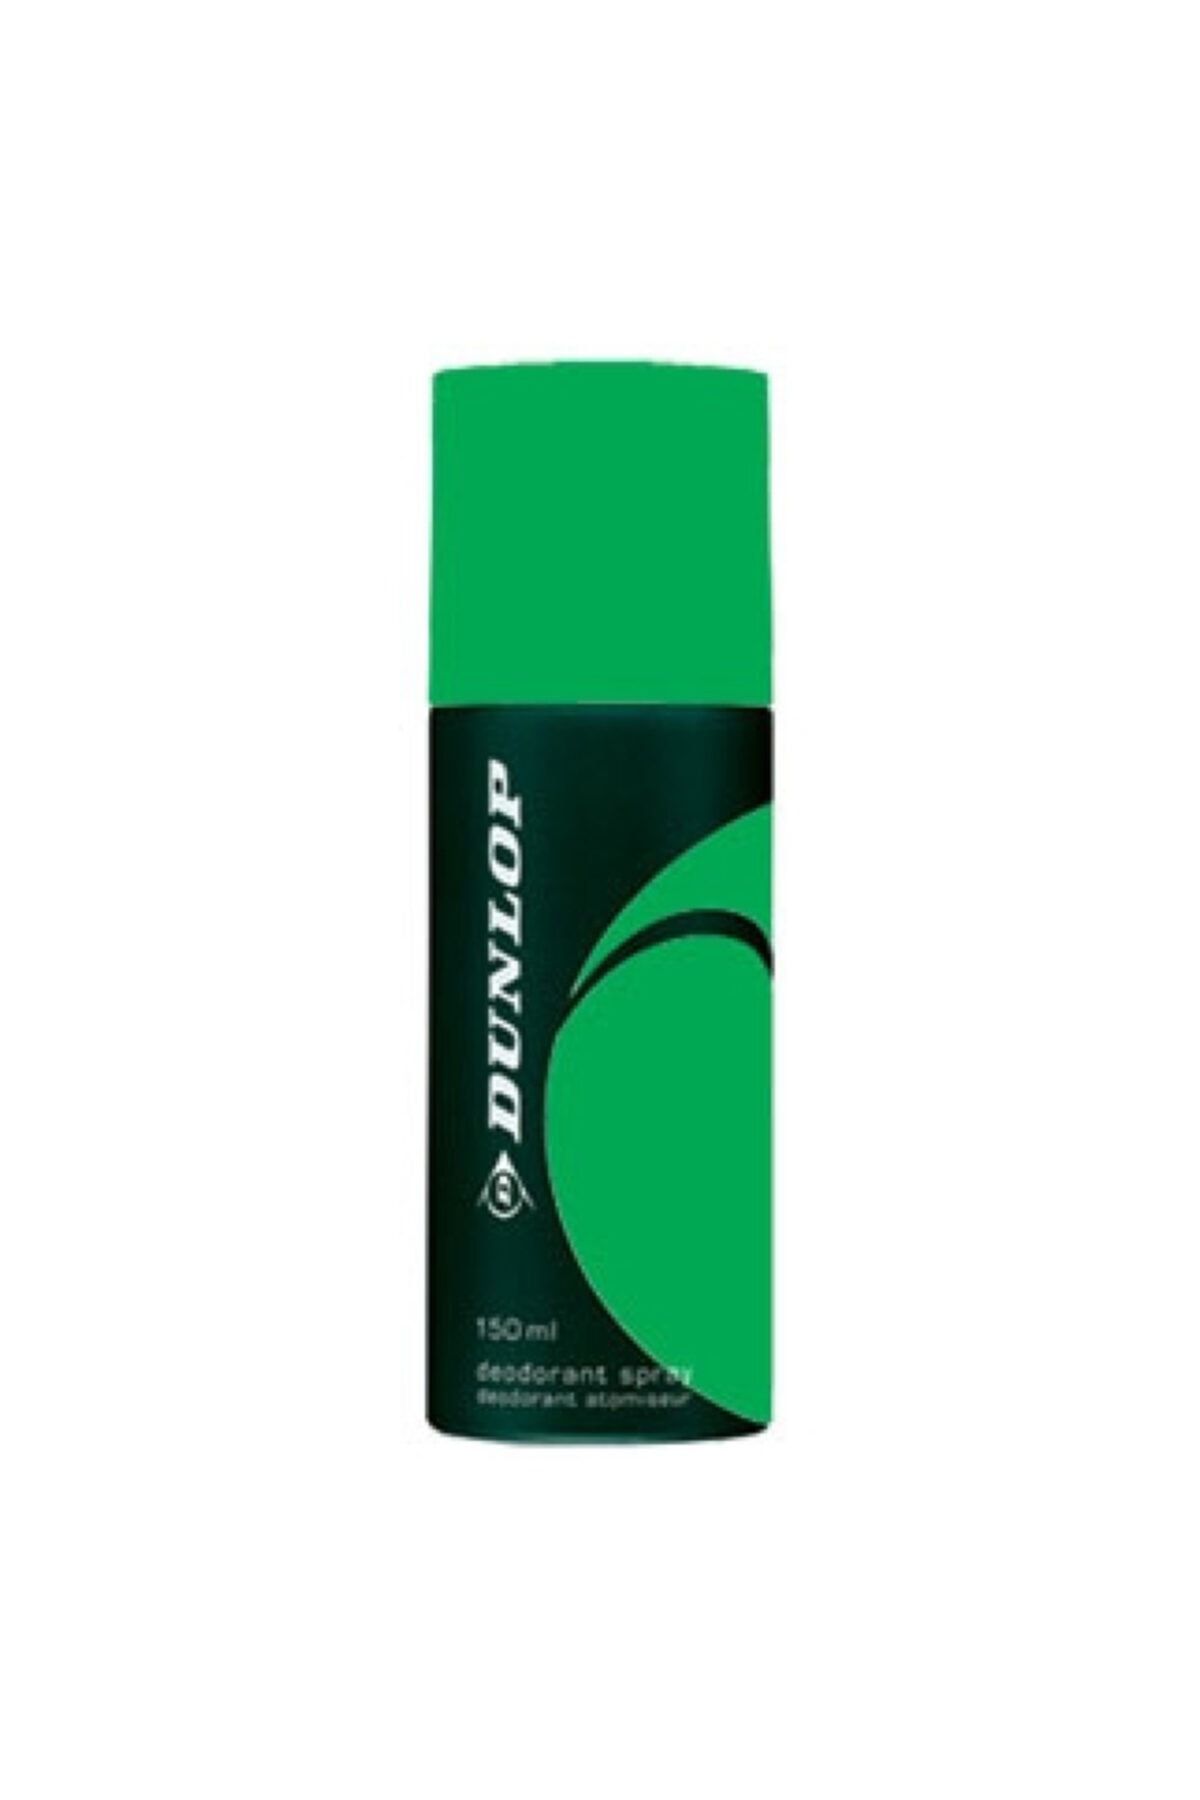 Dunlop Classıc 150 ml Deodorant